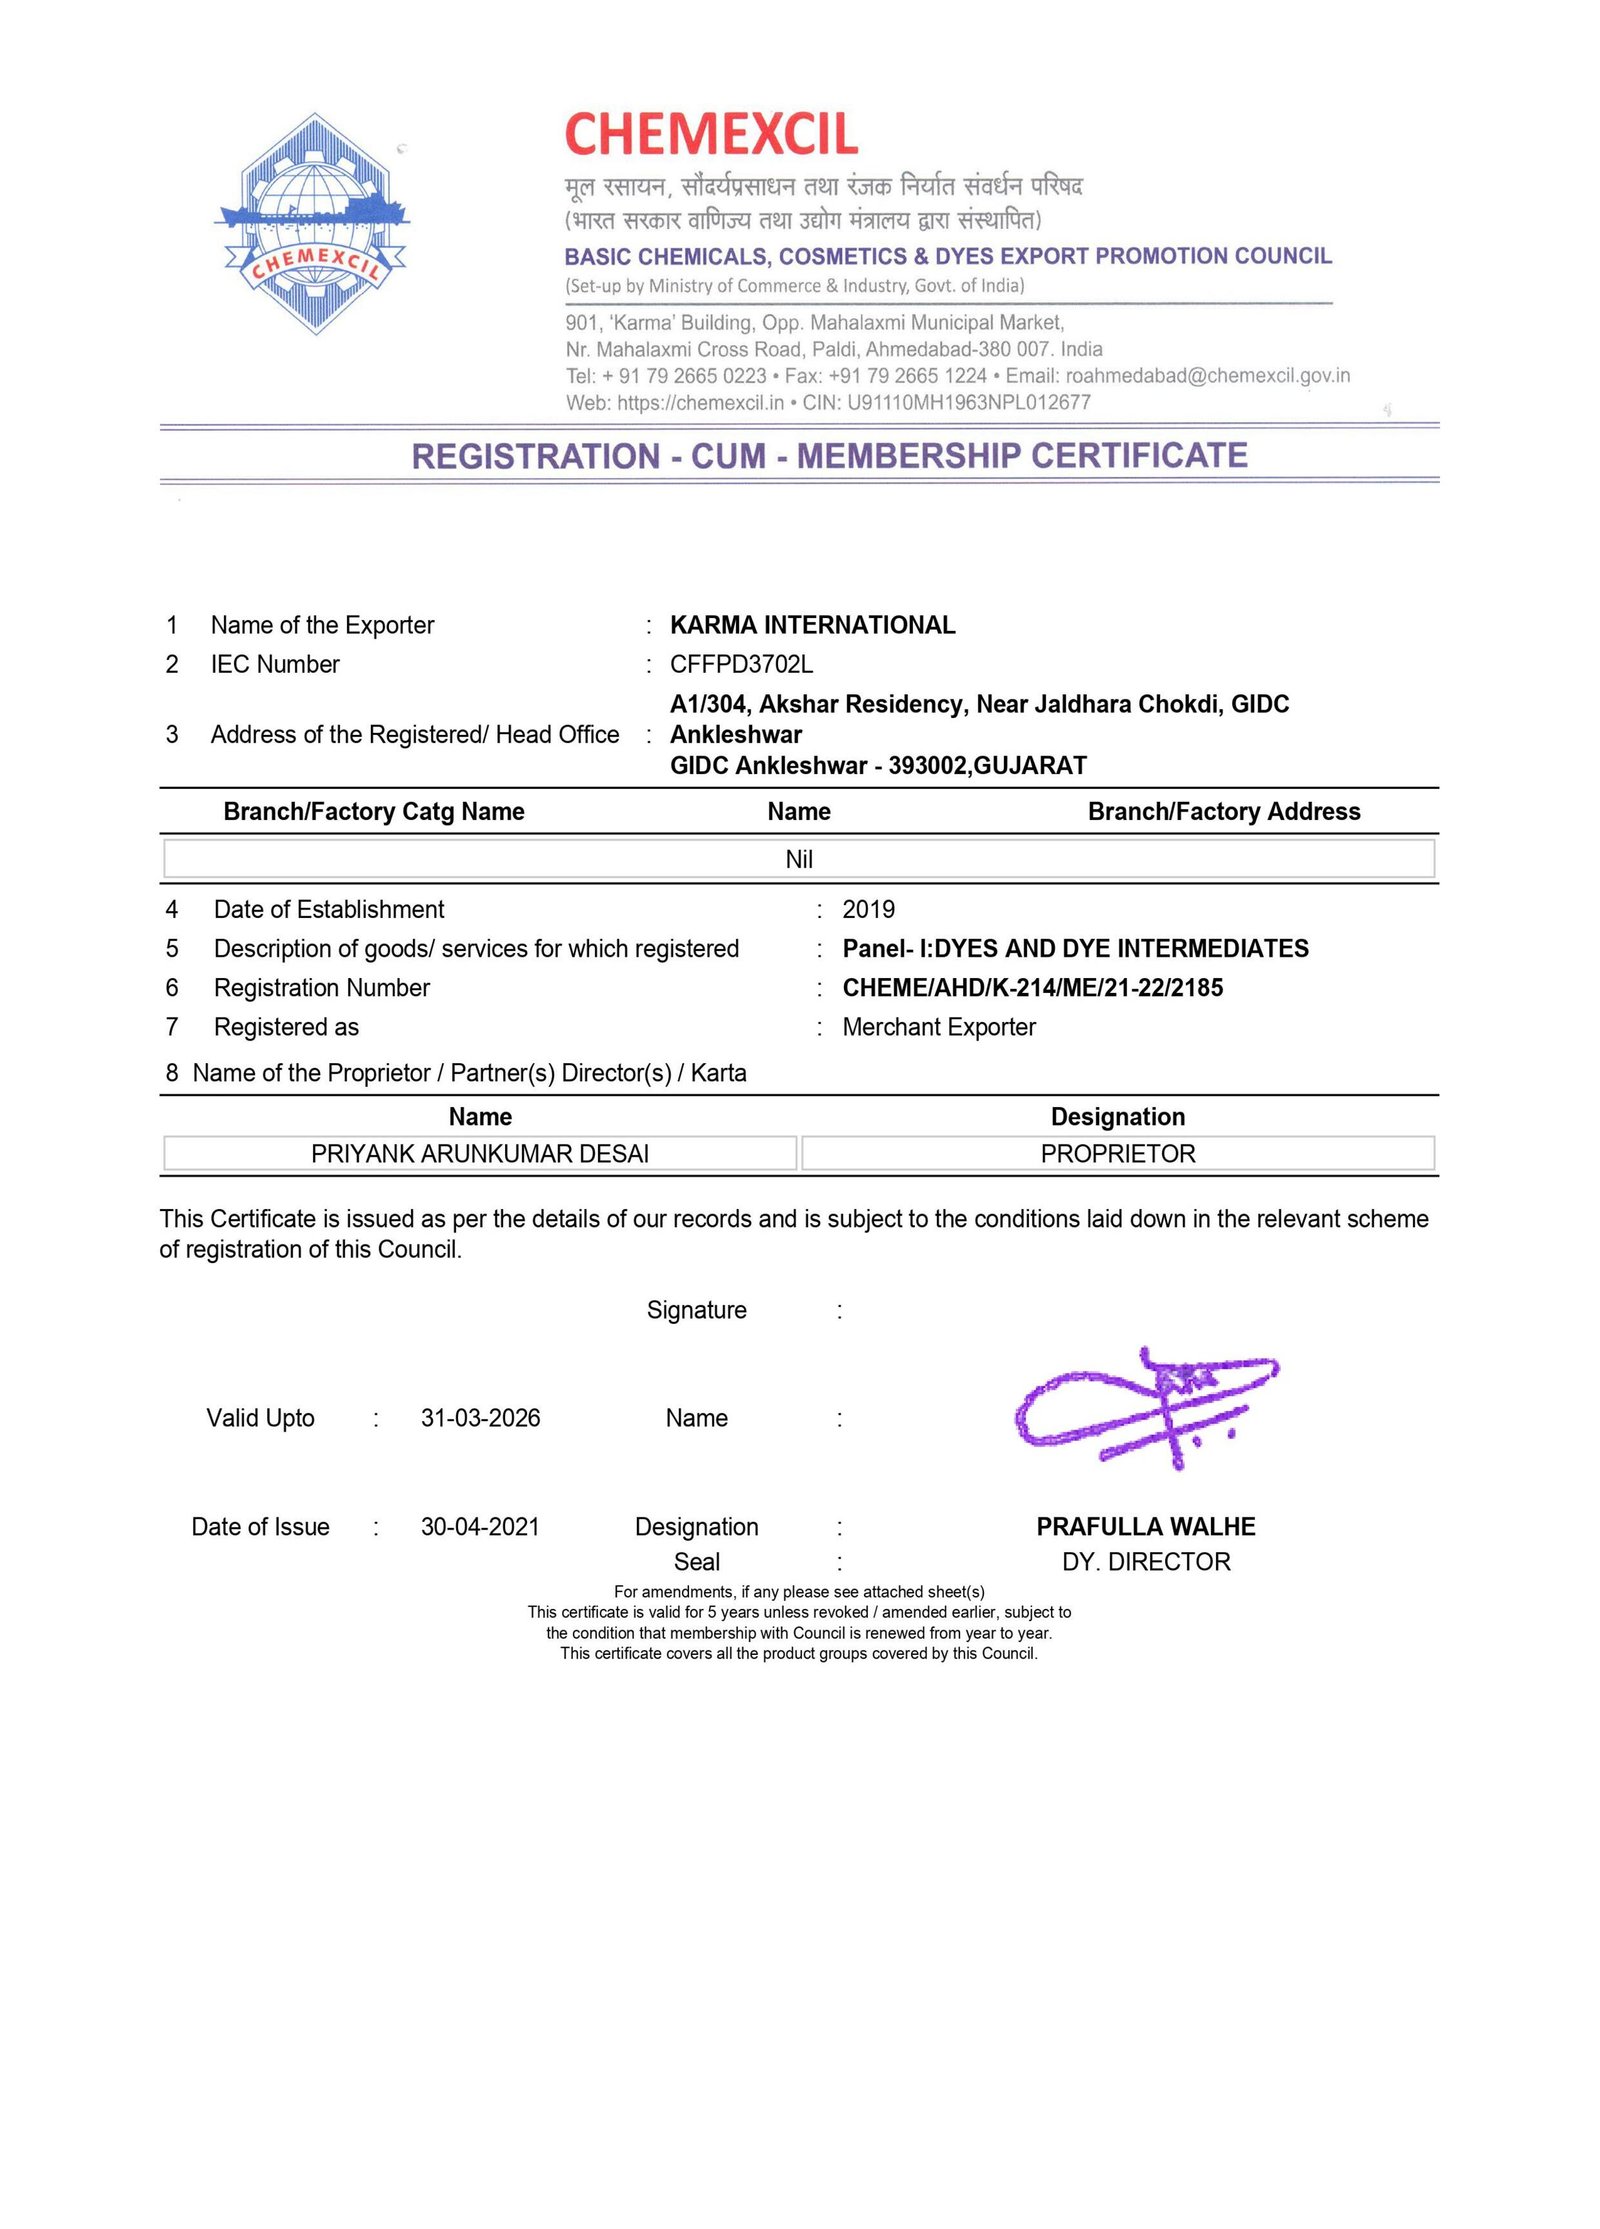 CHEMEXCIL Certificate